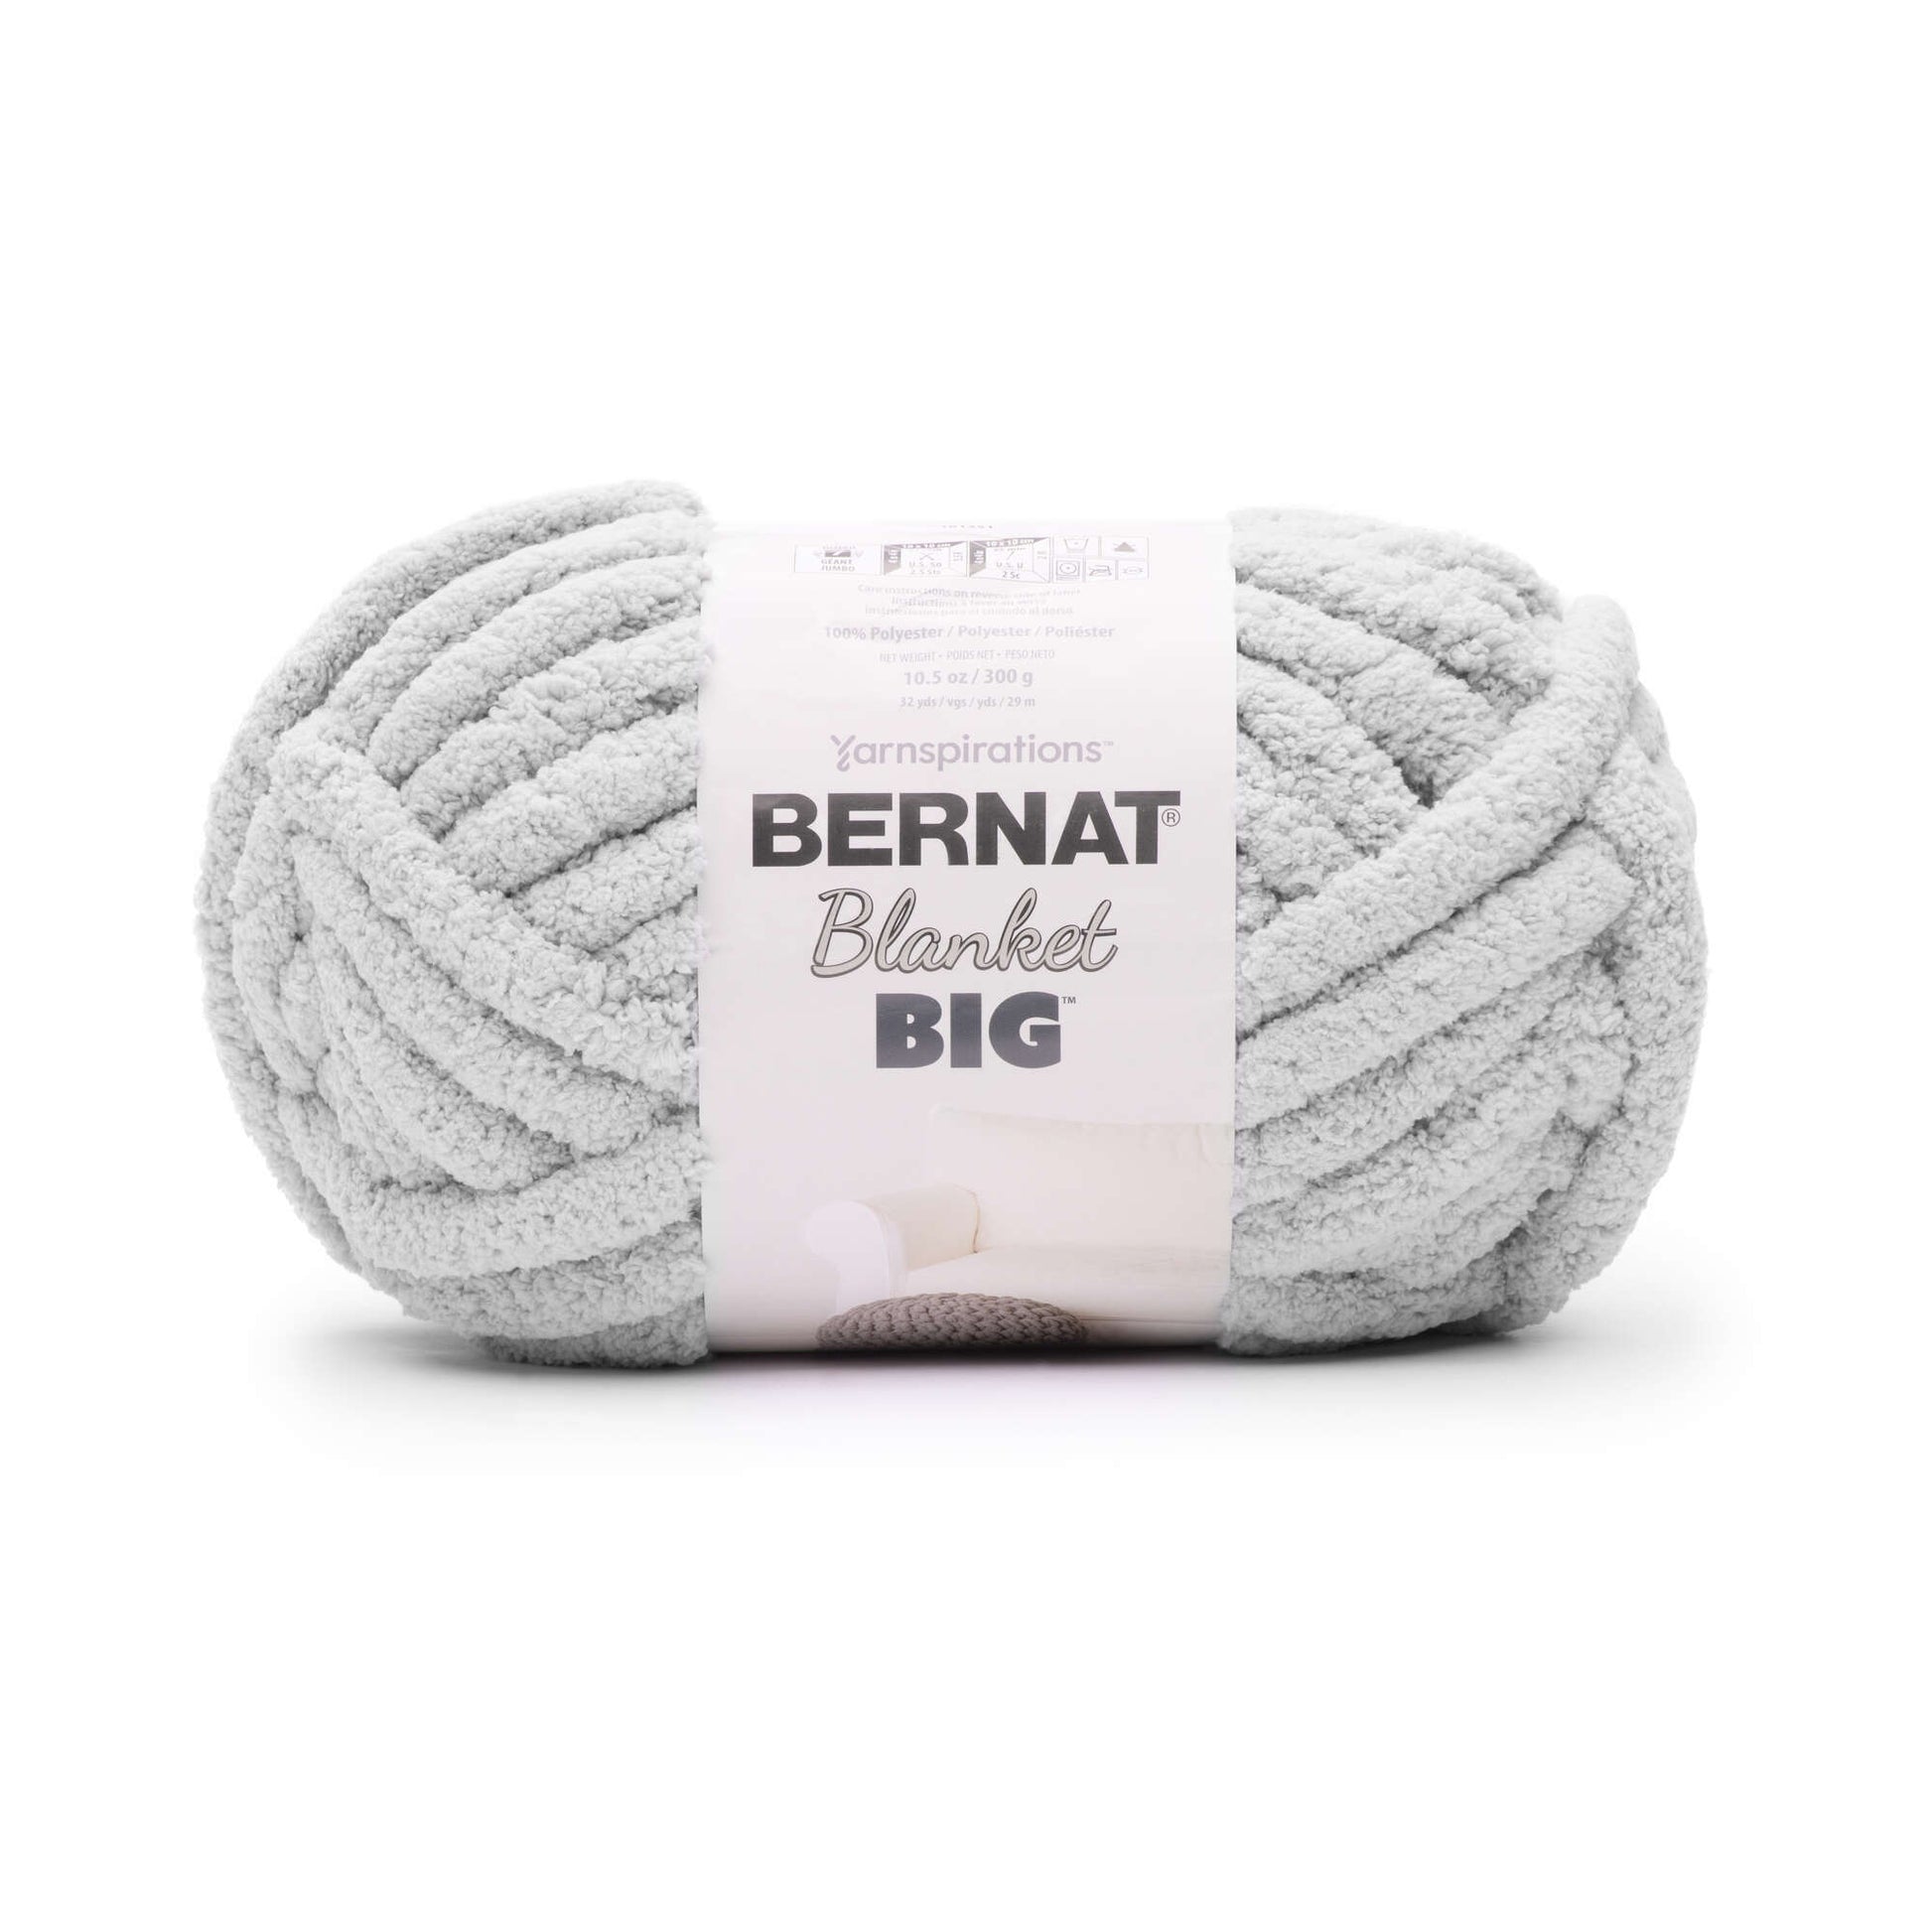 Bernat Blanket Big Yarn (300g/10.5oz) Misty Gray